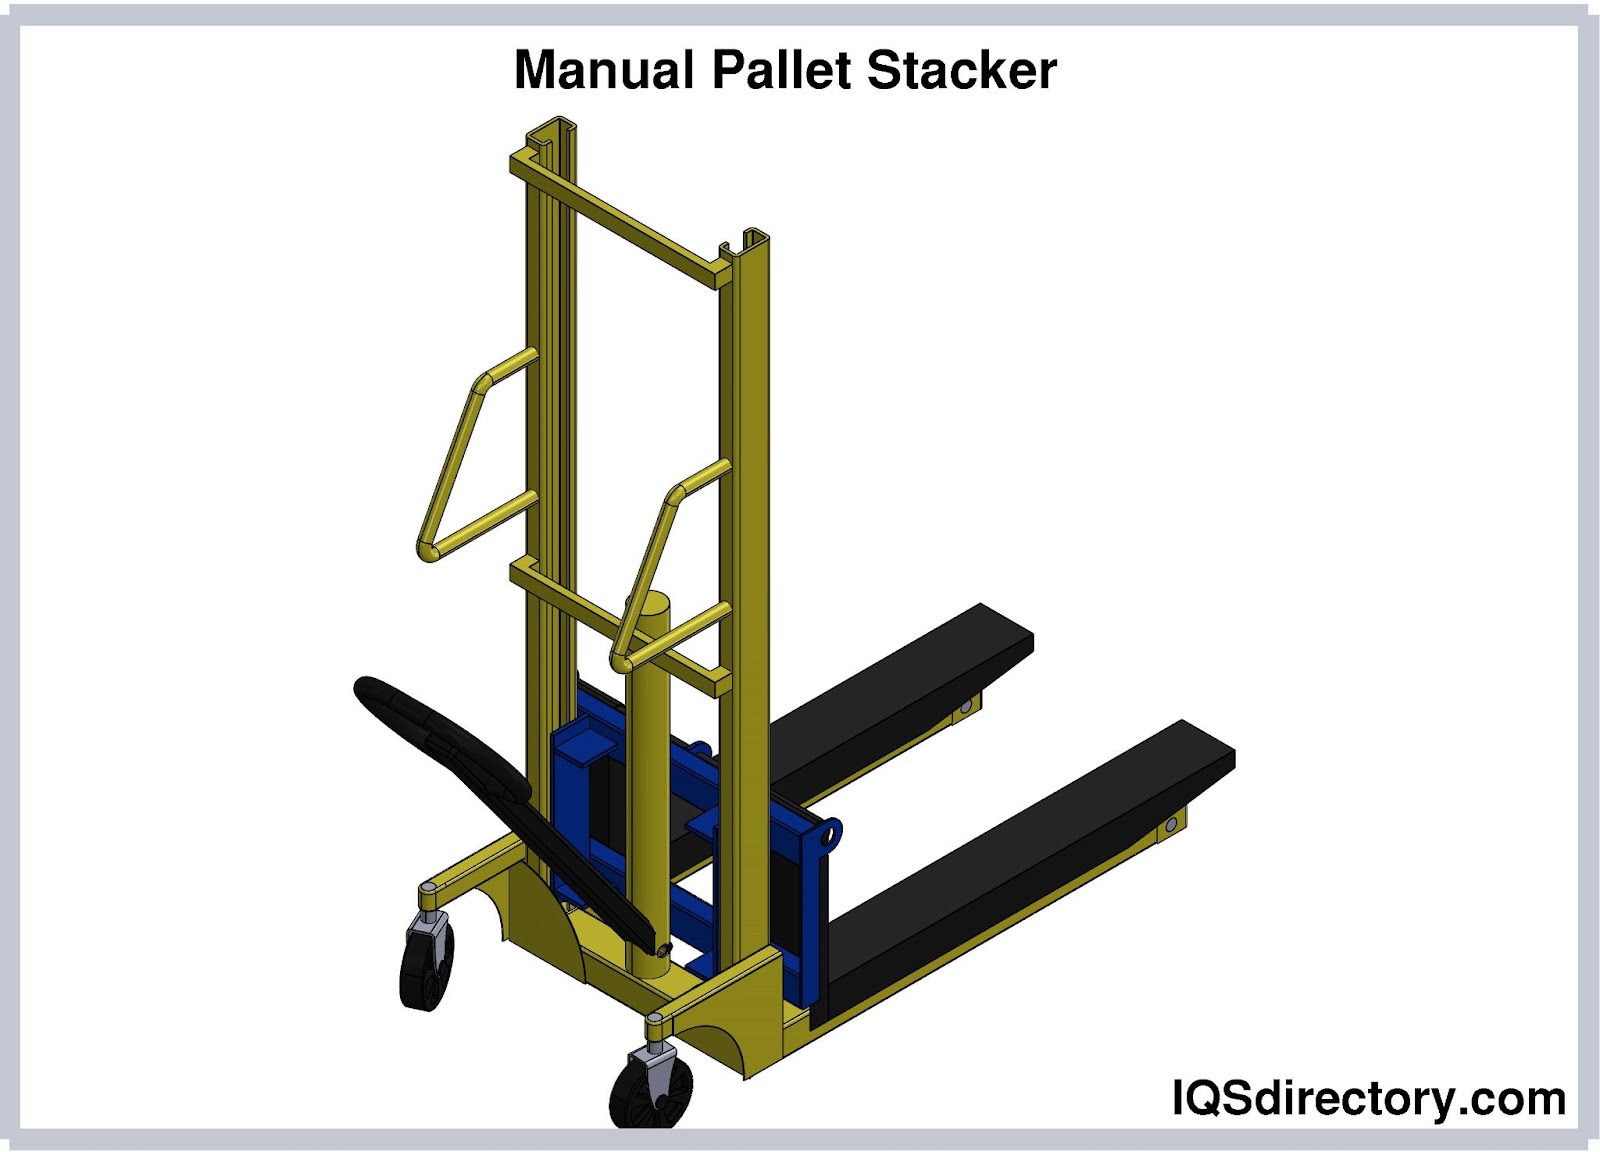 Manual Pallet Stacker